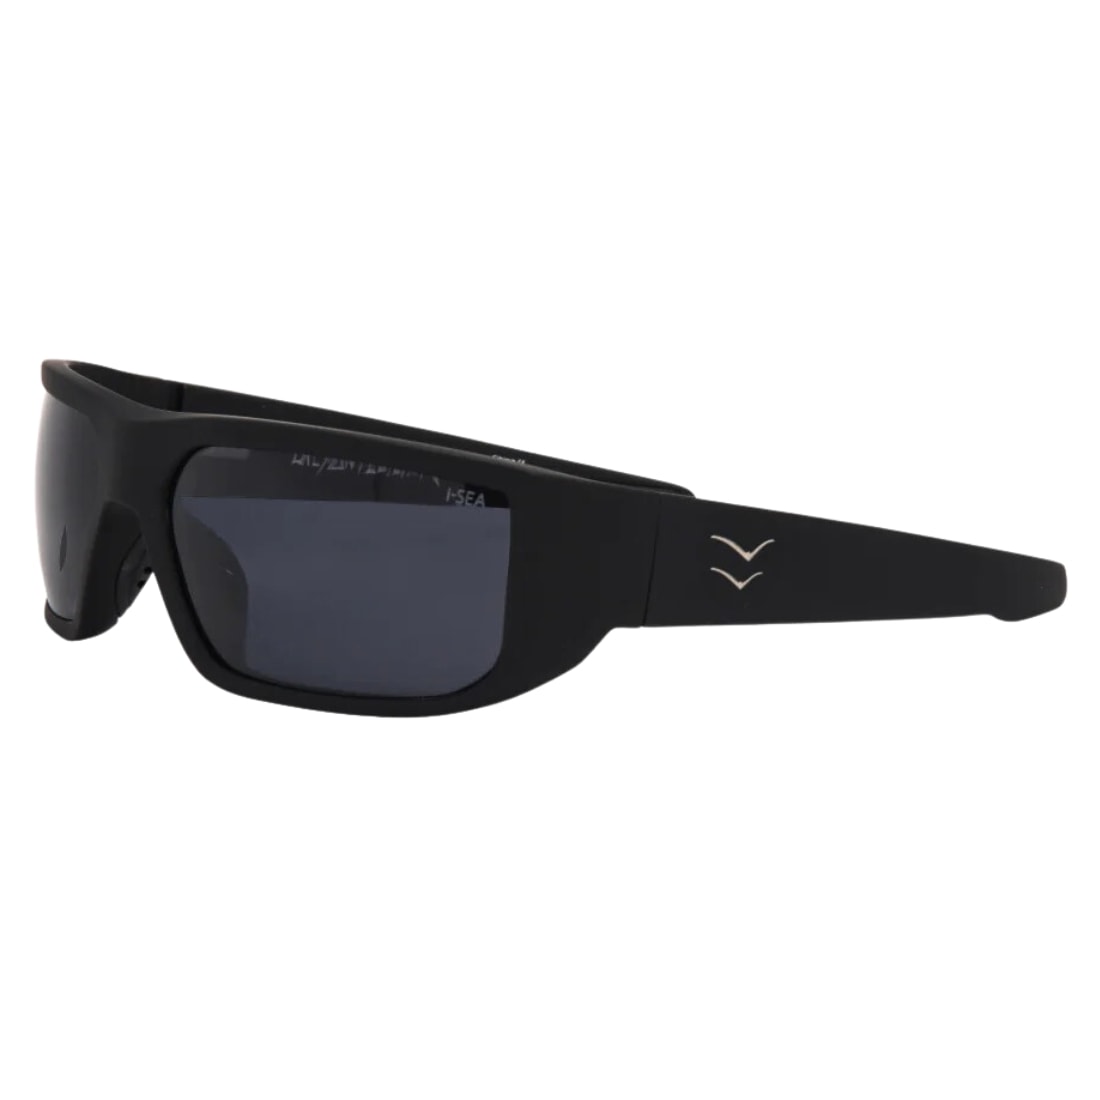 I-Sea Greyson Fletcher Wrap Around Polarised Sunglasses - Black/Smoke Polarized Lens - Wrap Around Sunglasses by I-Sea